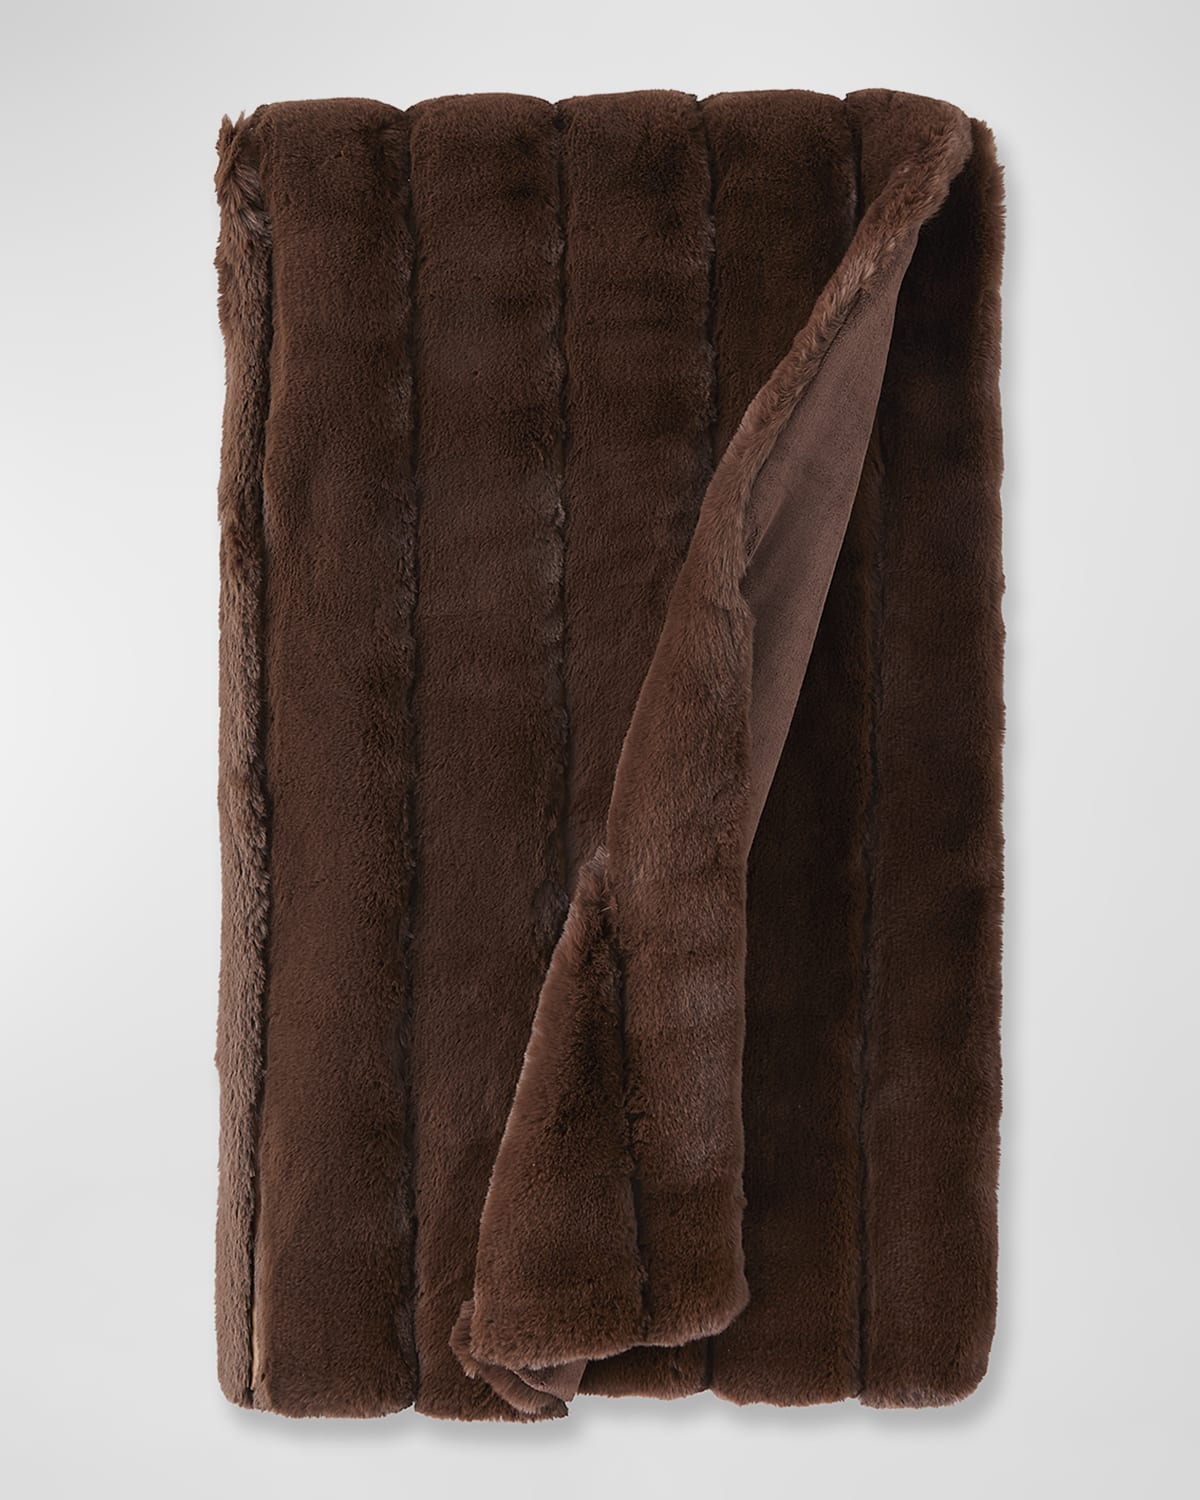 Fabulous Furs Posh Faux-Fur Throw Blanket, 60